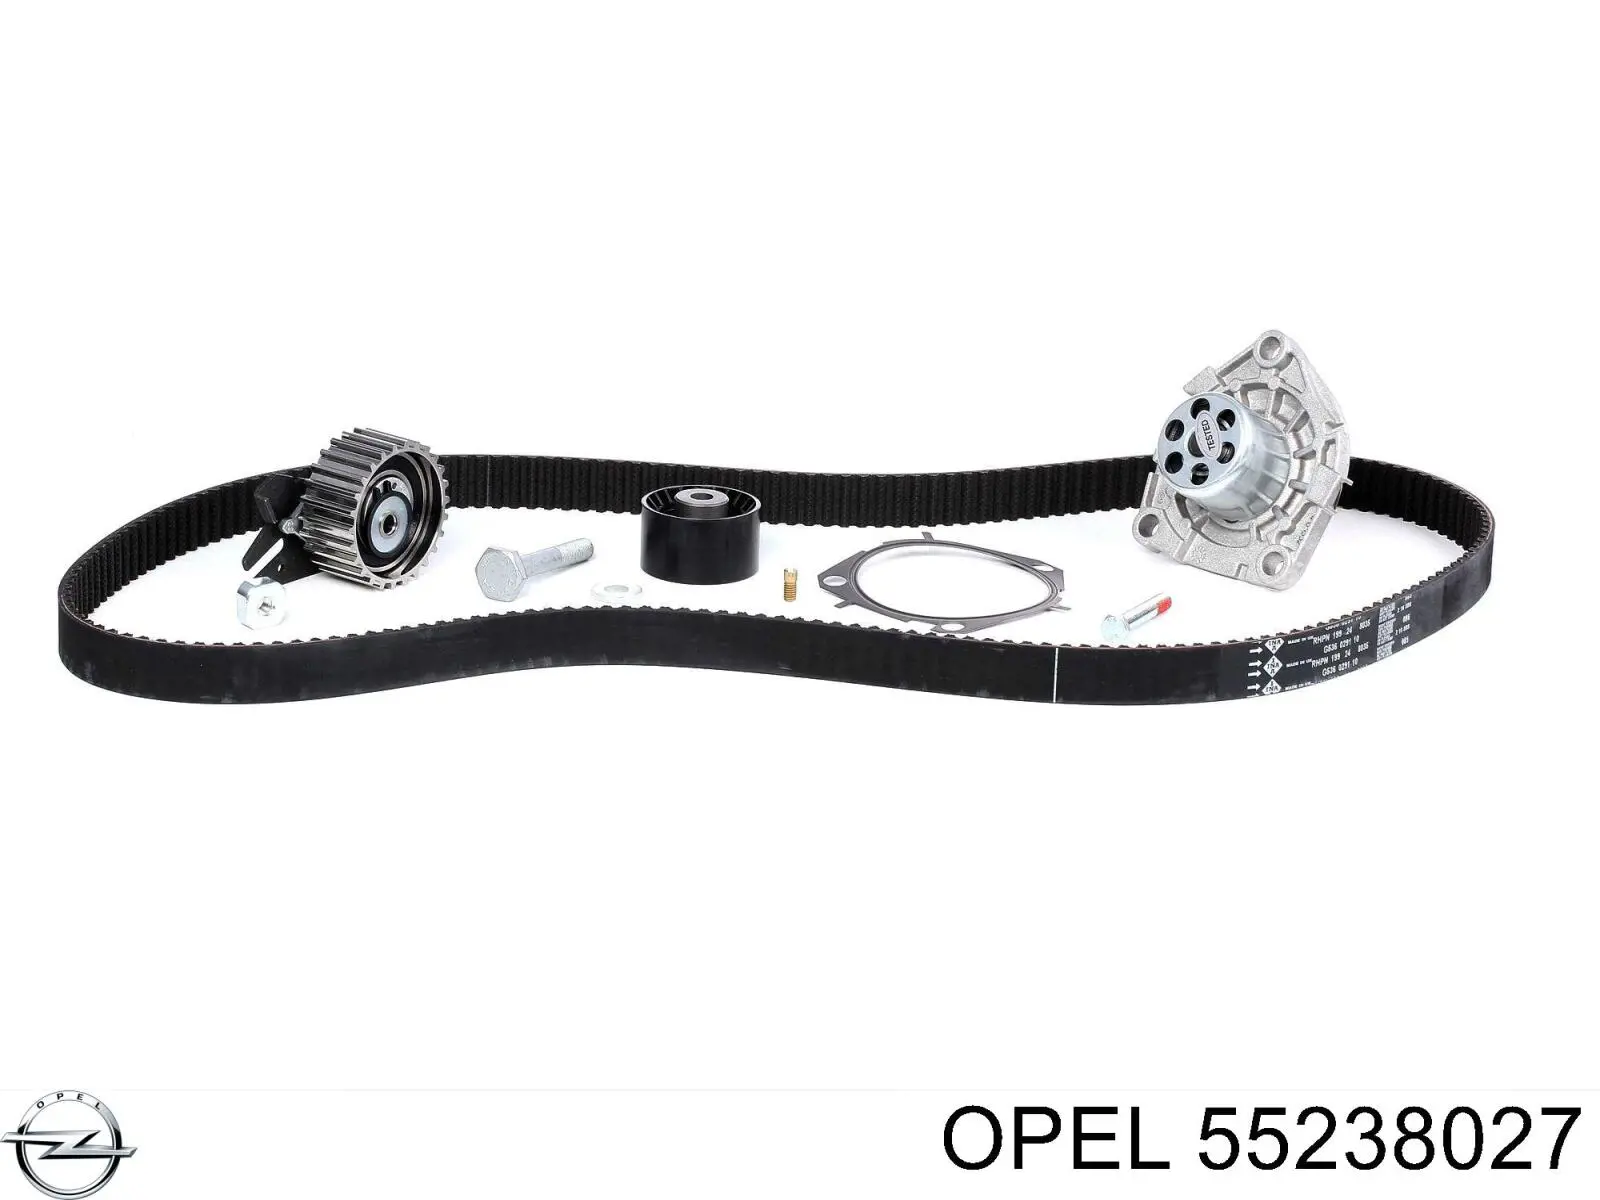 55238027 Opel tensor correa distribución